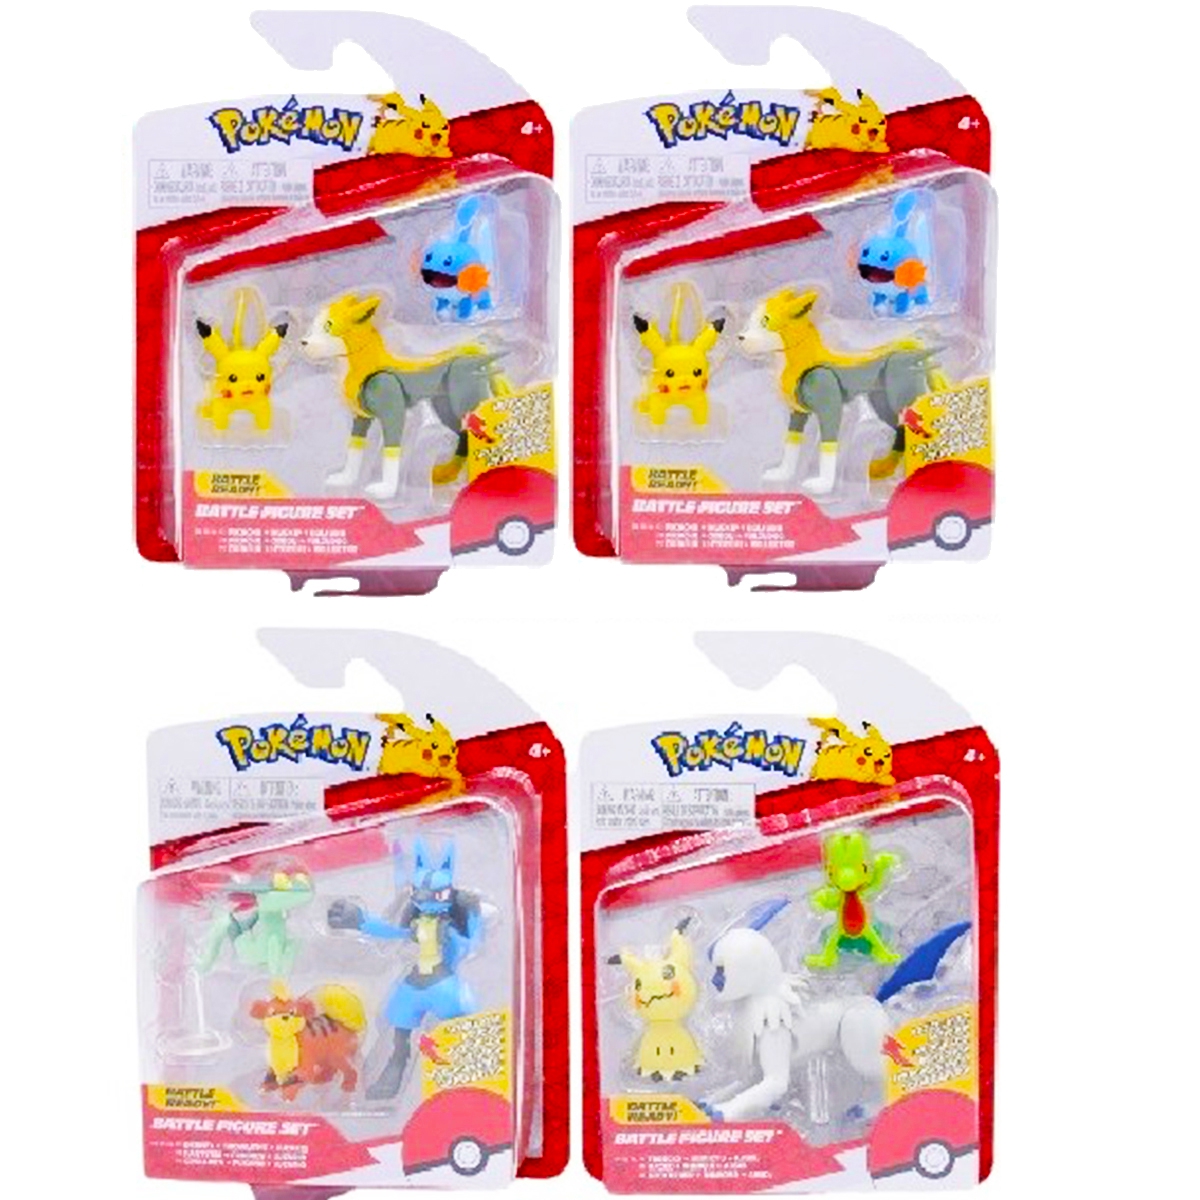 https://www.dstrib.com/images/produits/maxi/6791-pokemon-figurine-lot-de-4-battle-figurine-set-serie-12-fulgudog-x2-lucario-absol.jpg